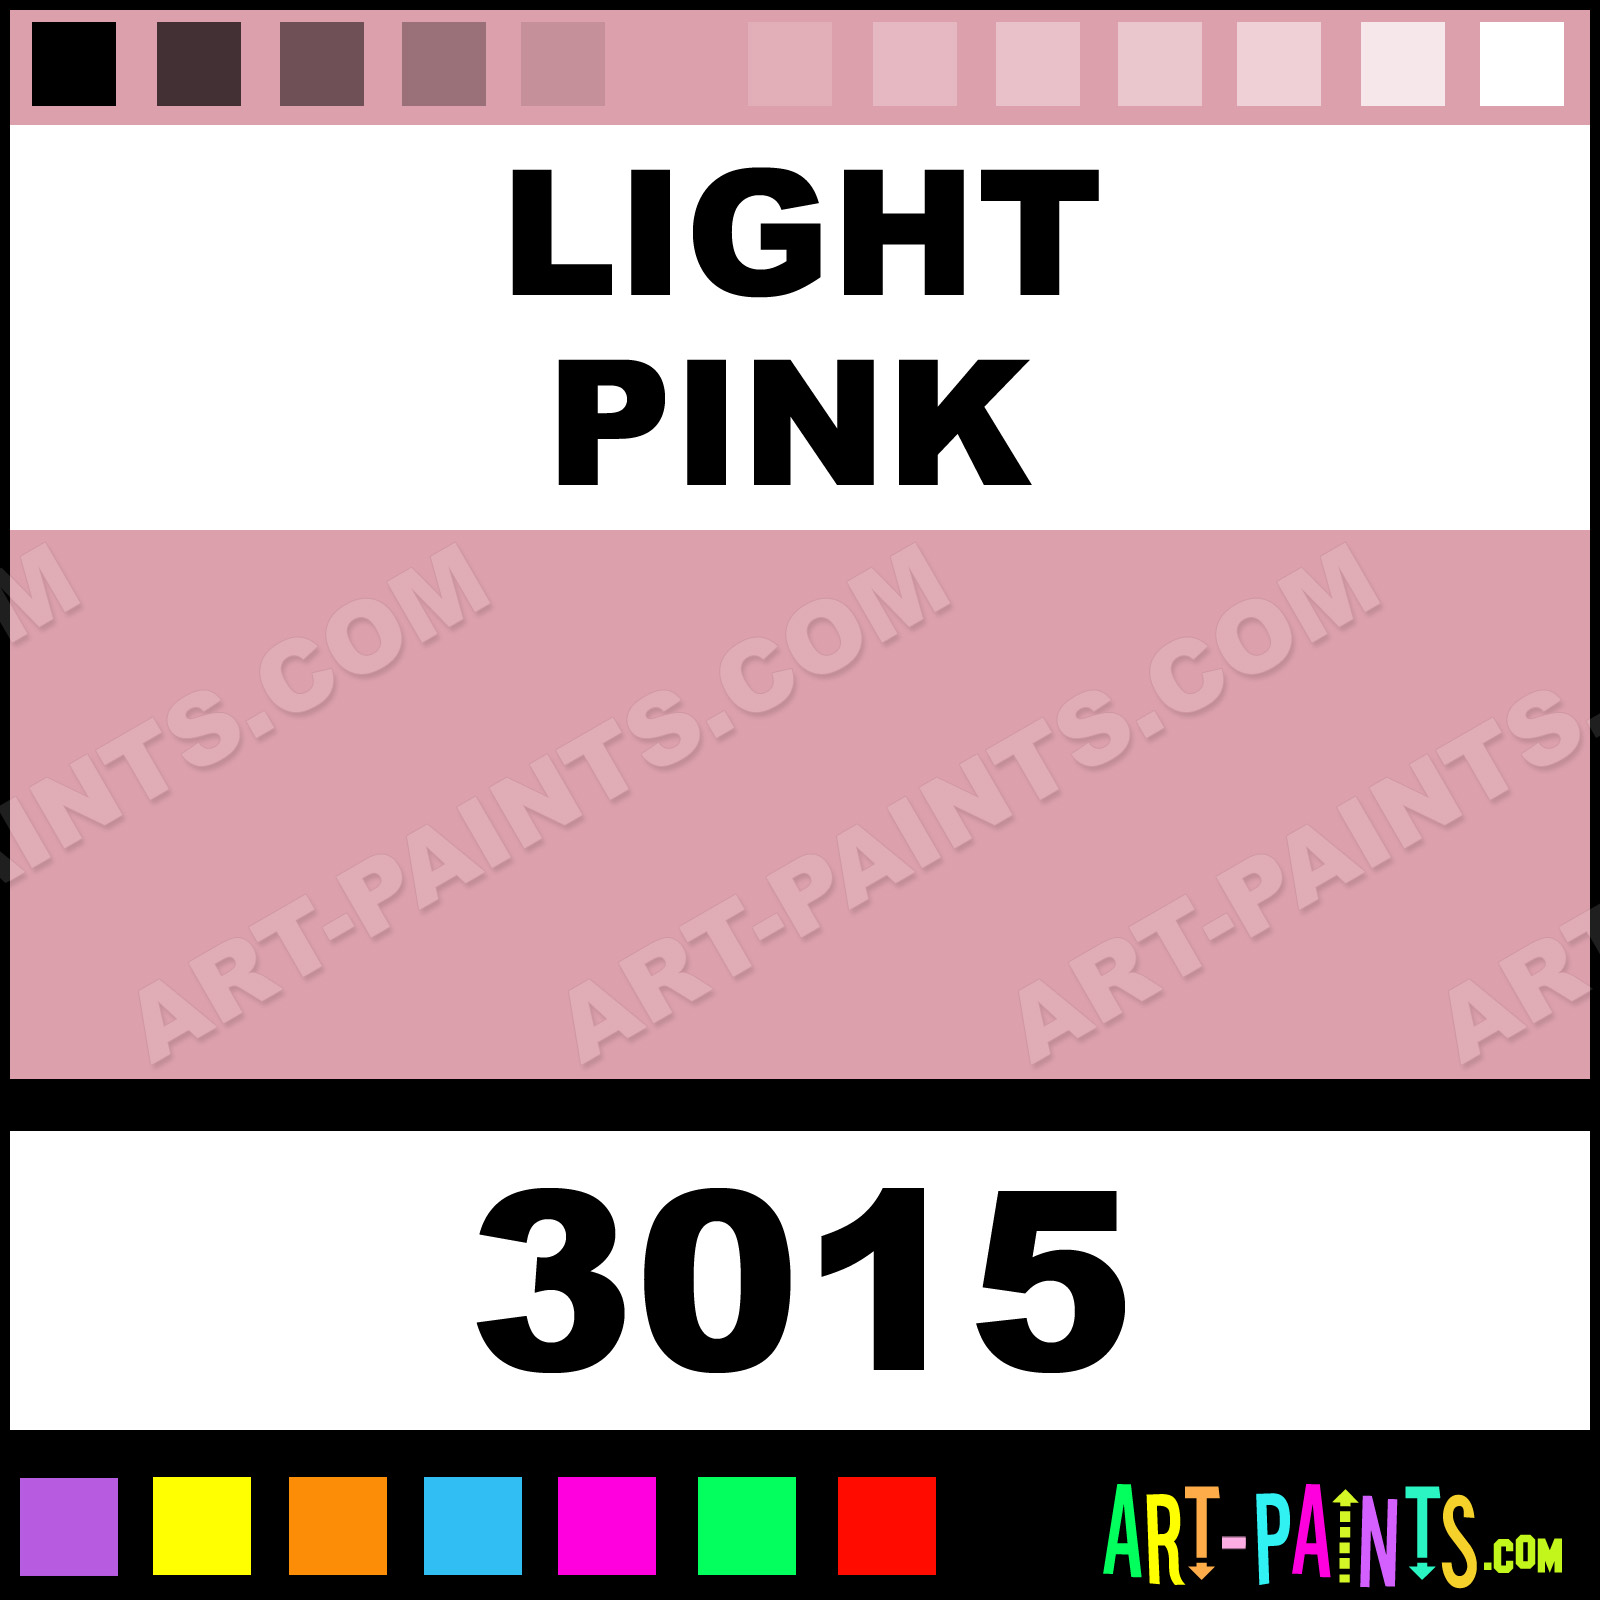 Light Pink Glossy Acrylic Airbrush Spray Paints - 3015 - Light